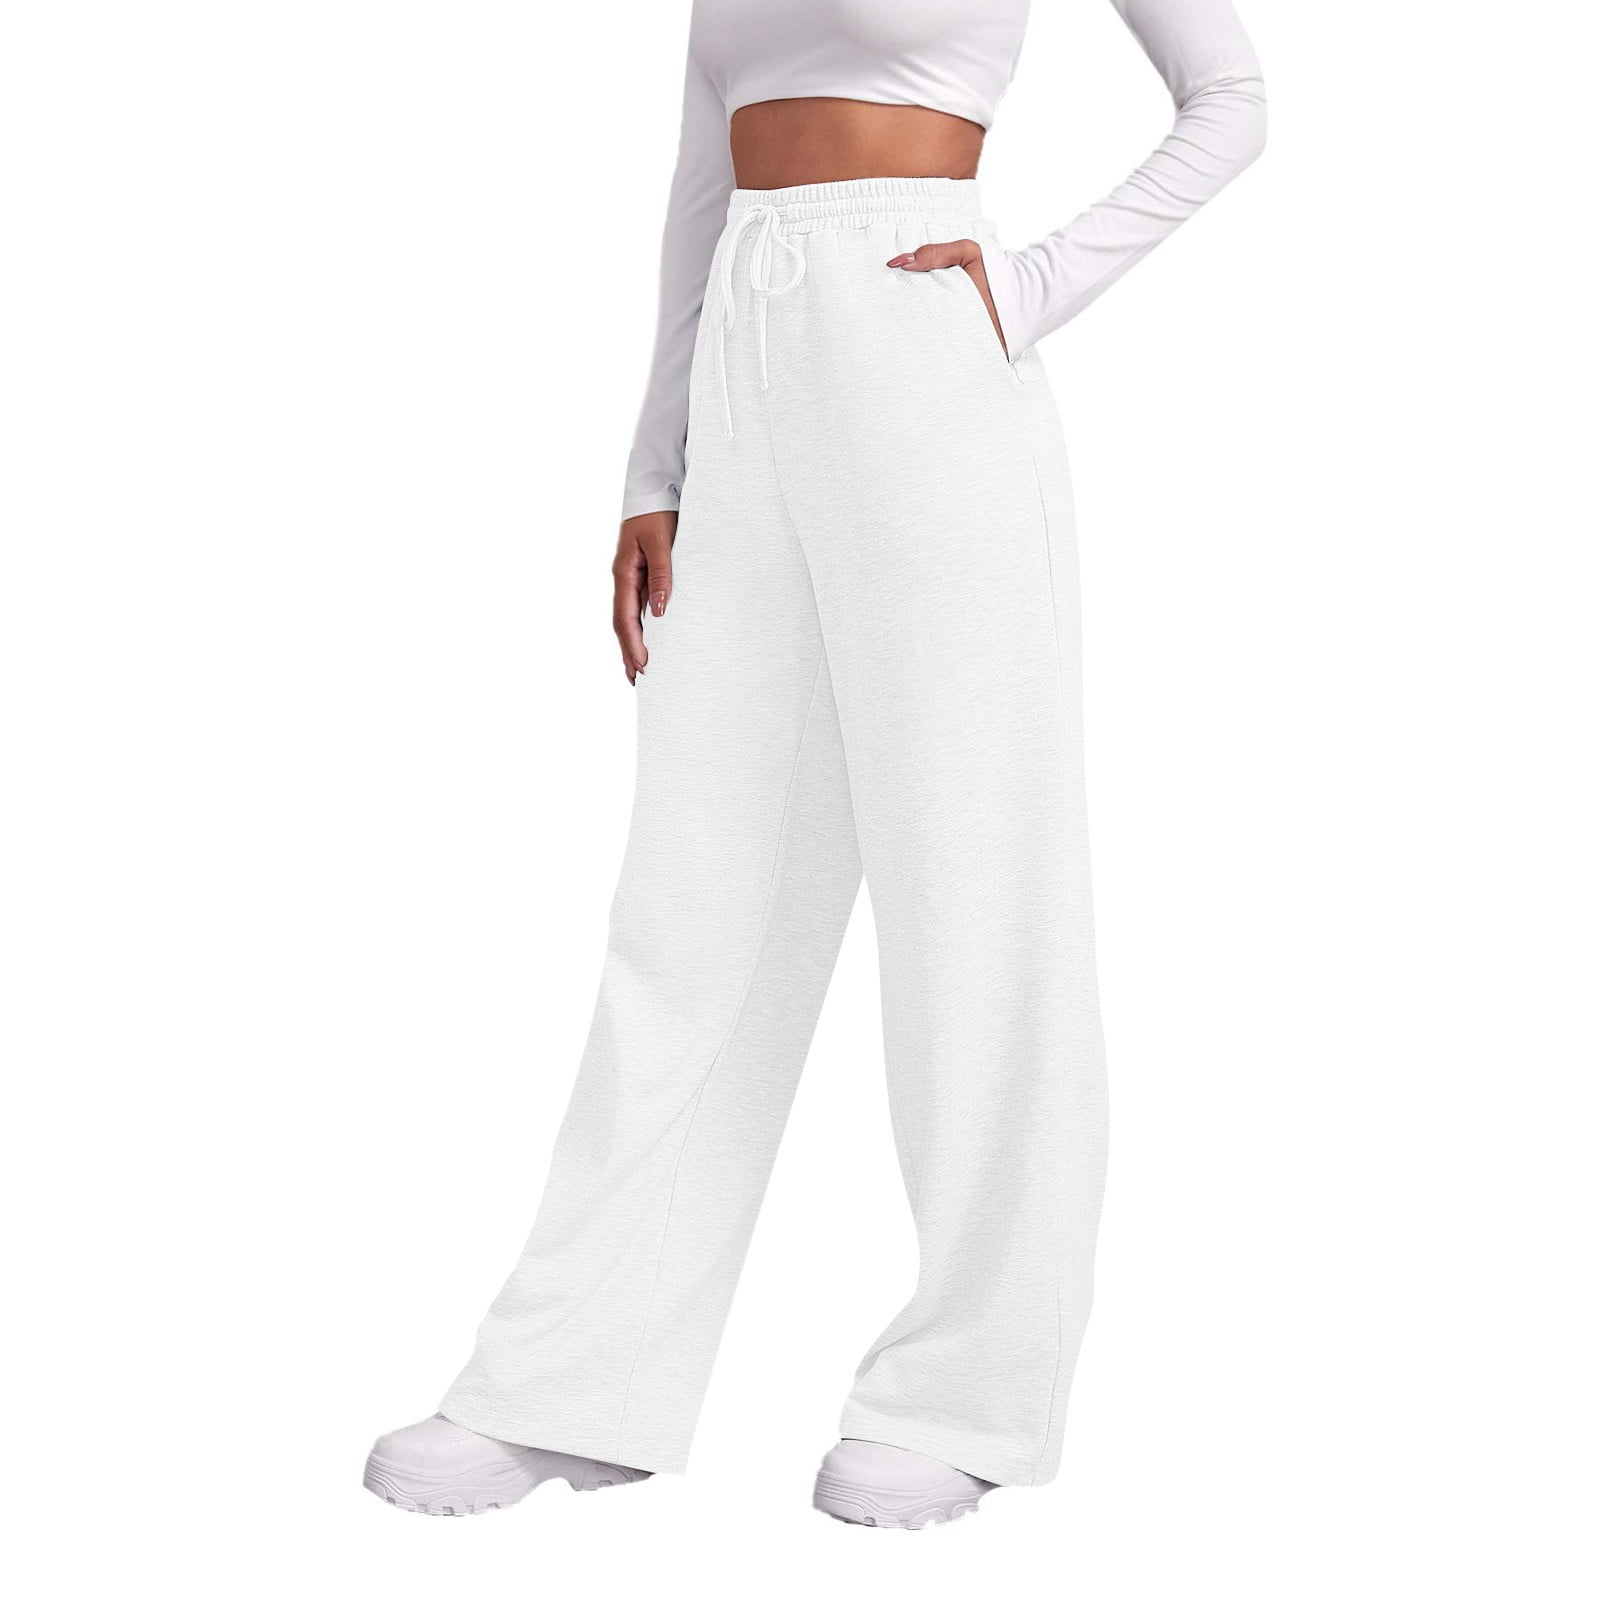 Urbanic Solid Women White Track Pants - Buy Urbanic Solid Women